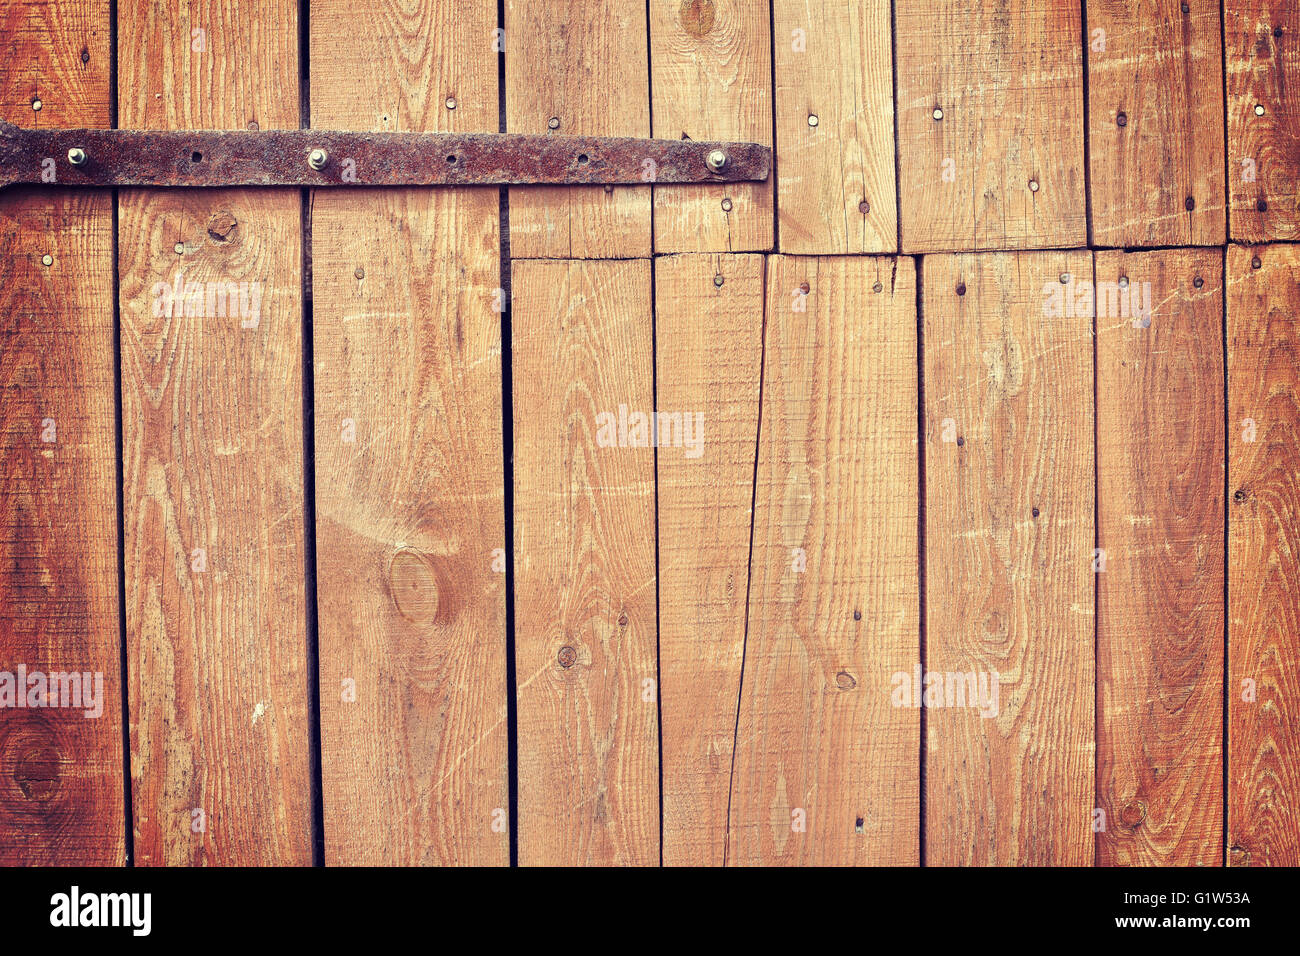 Vintage toned old wooden barn door background. Stock Photo